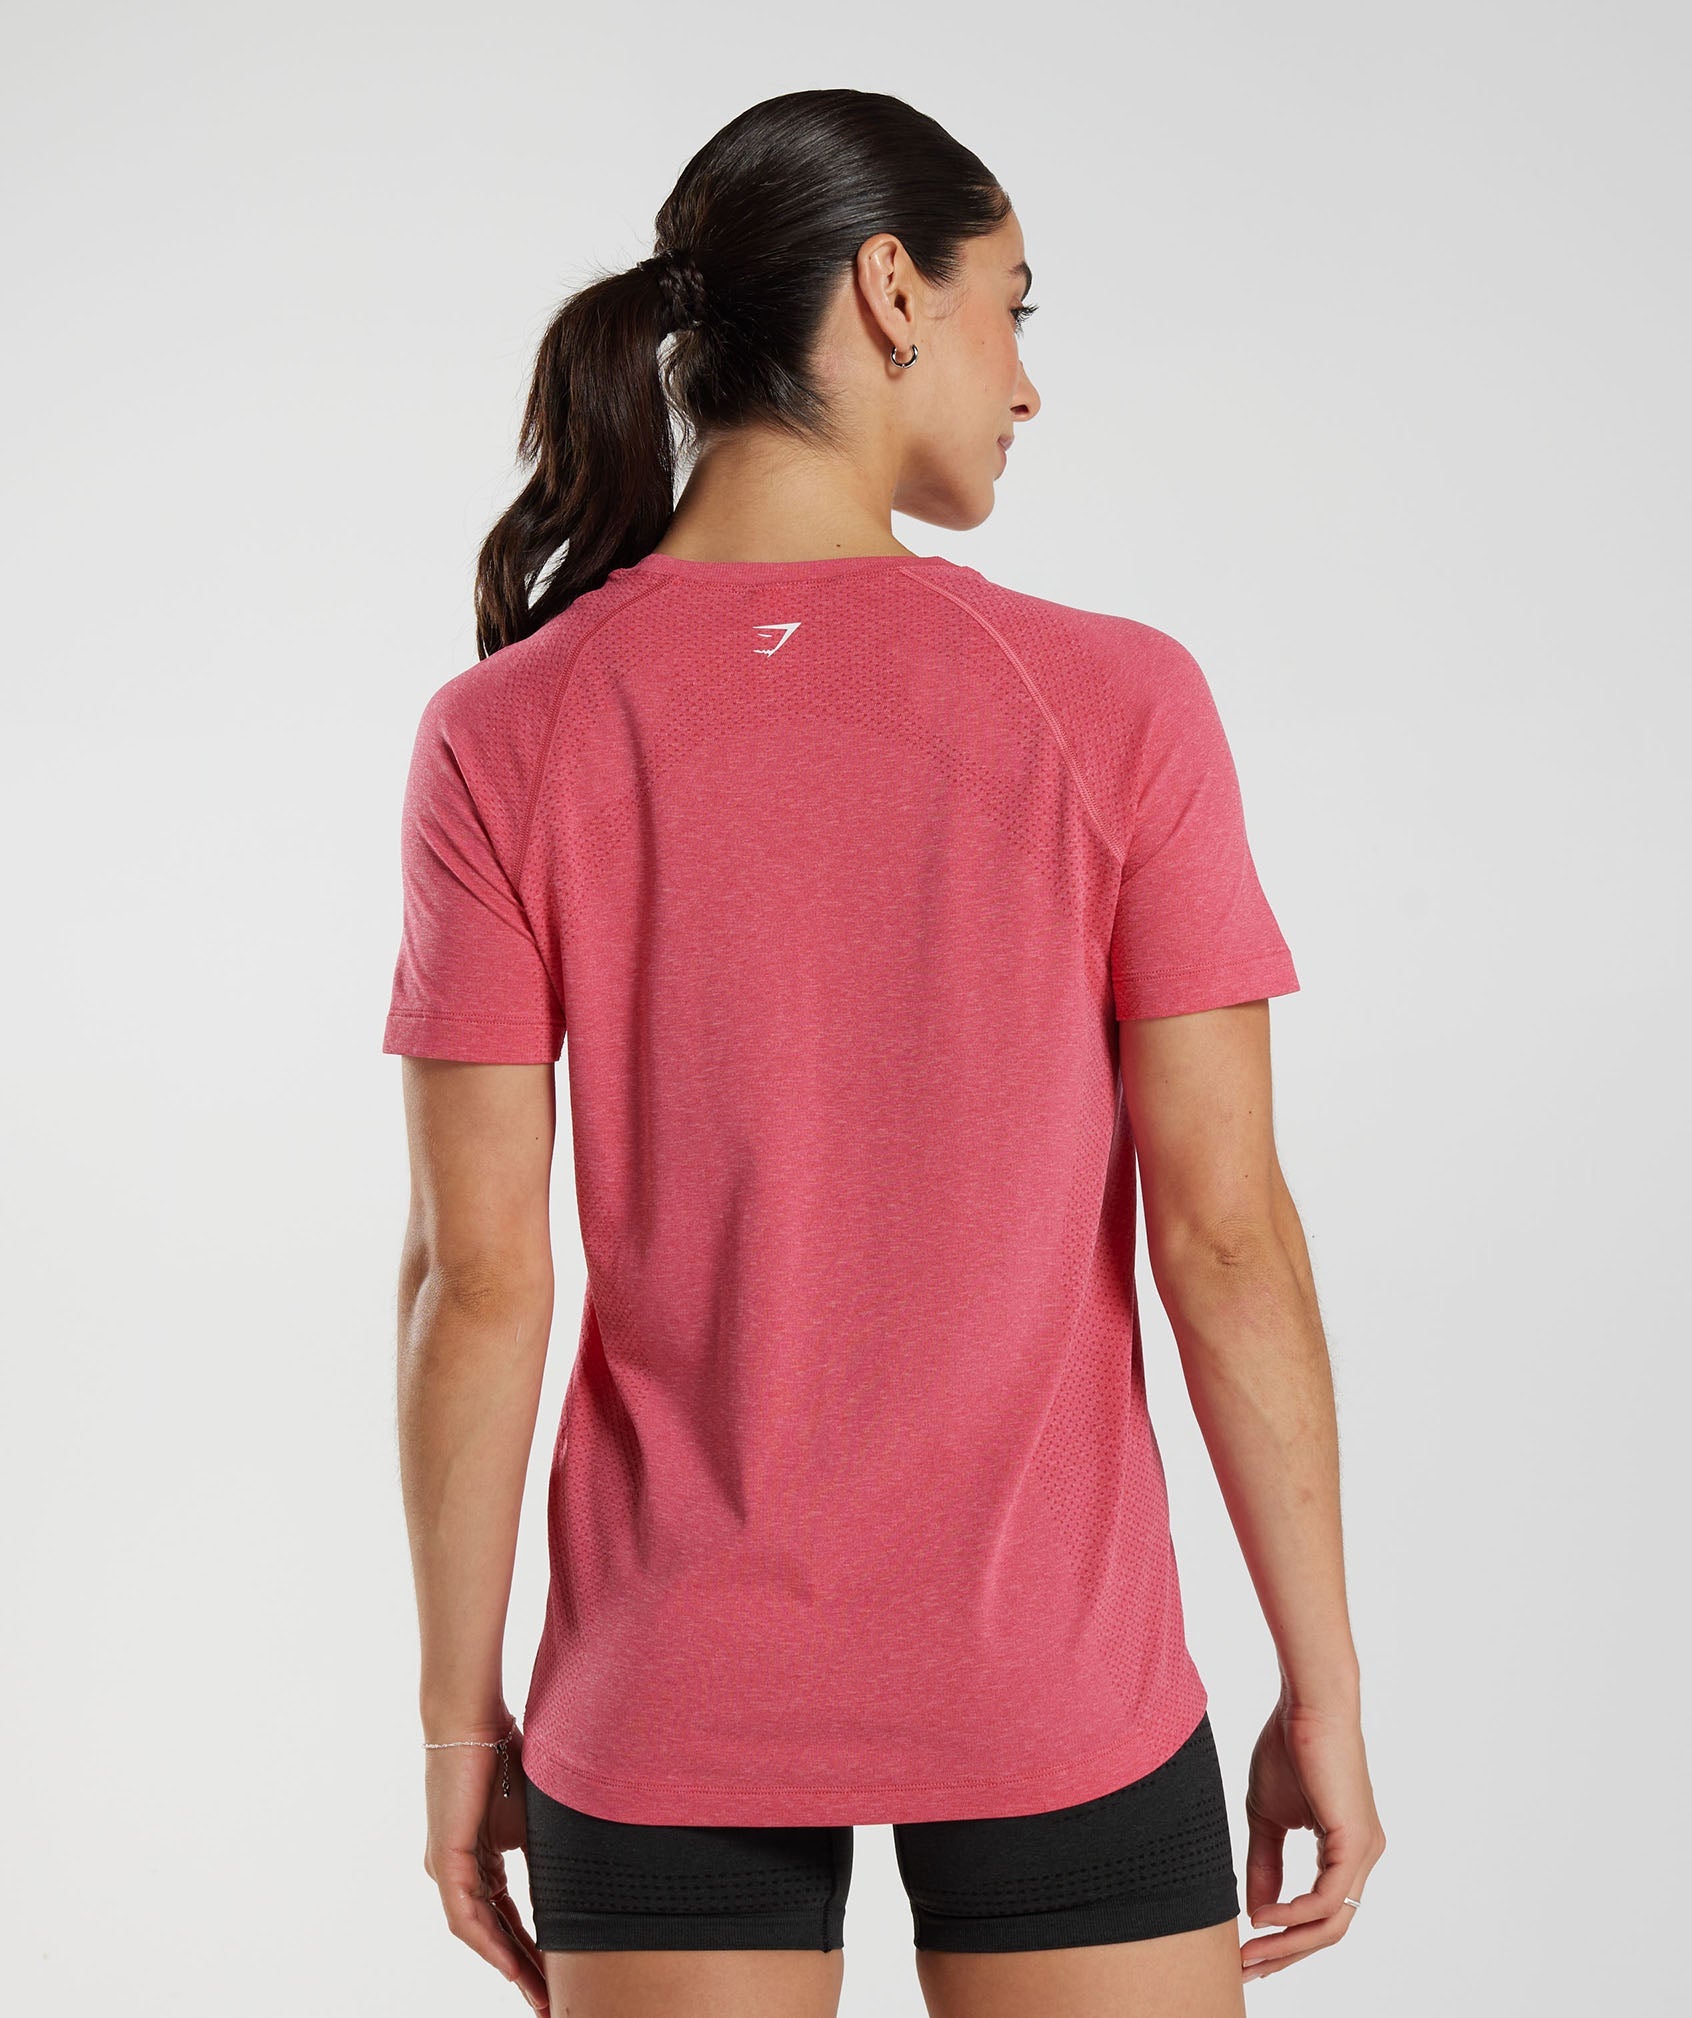 Vital Seamless 2.0 Light T-Shirt in Bright Fuchsia Marl